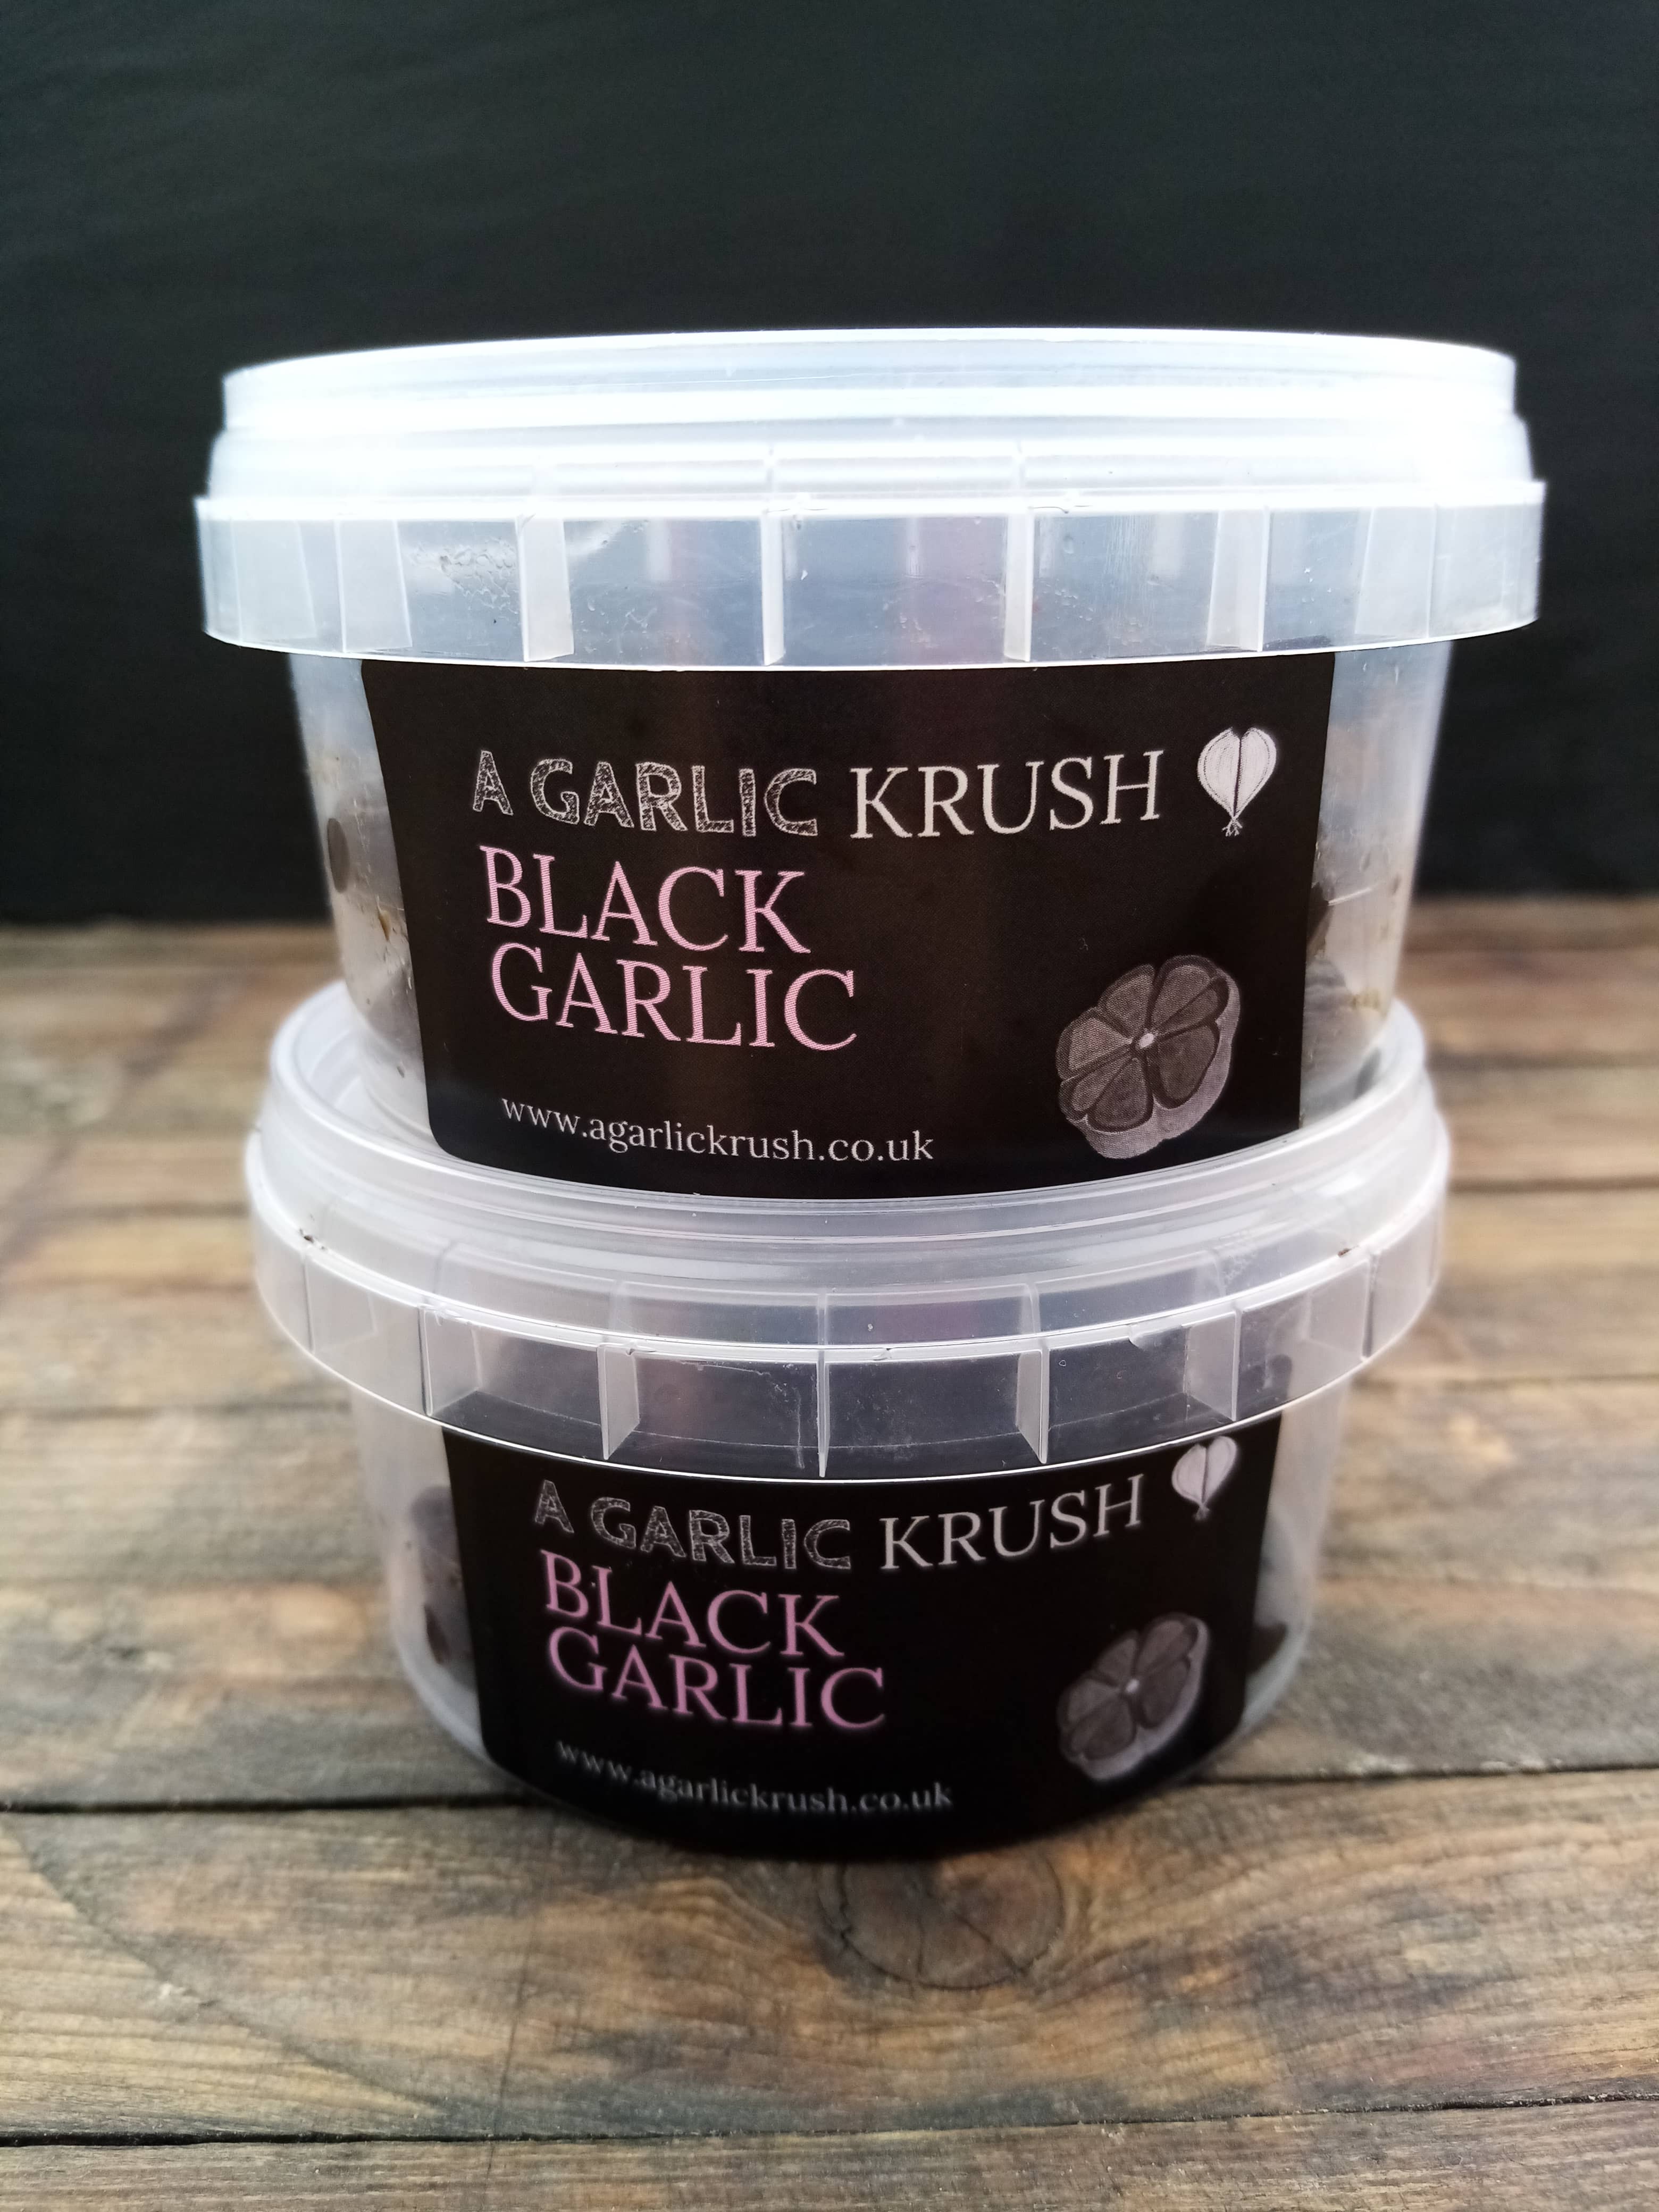 Peeled black garlic cloves